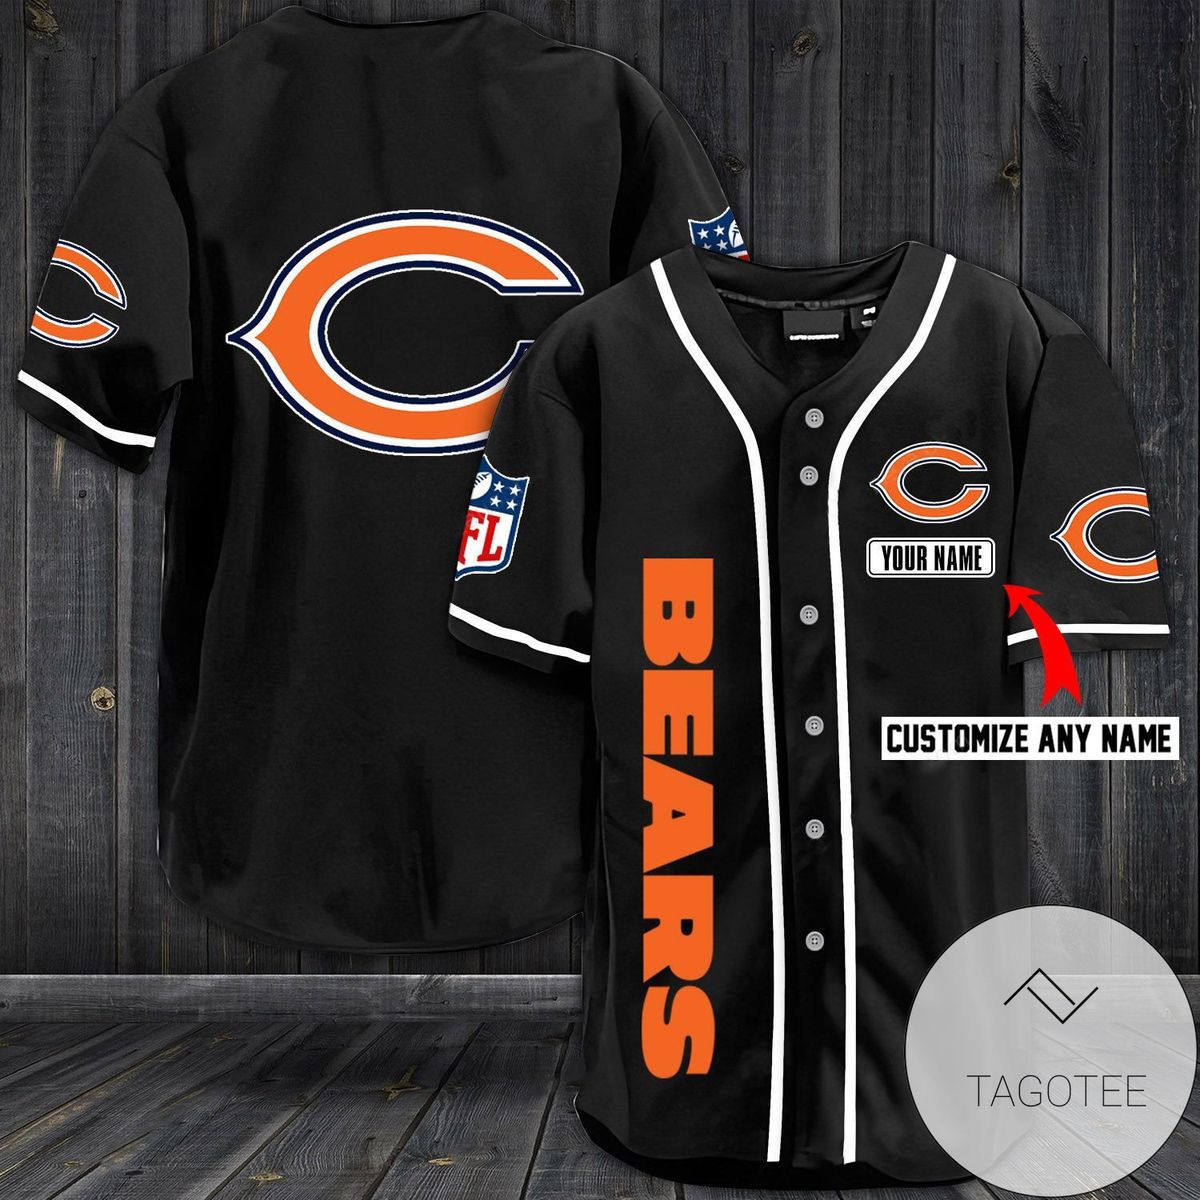 Personalized NFL Chicago Bears Baseball Customized Jersey